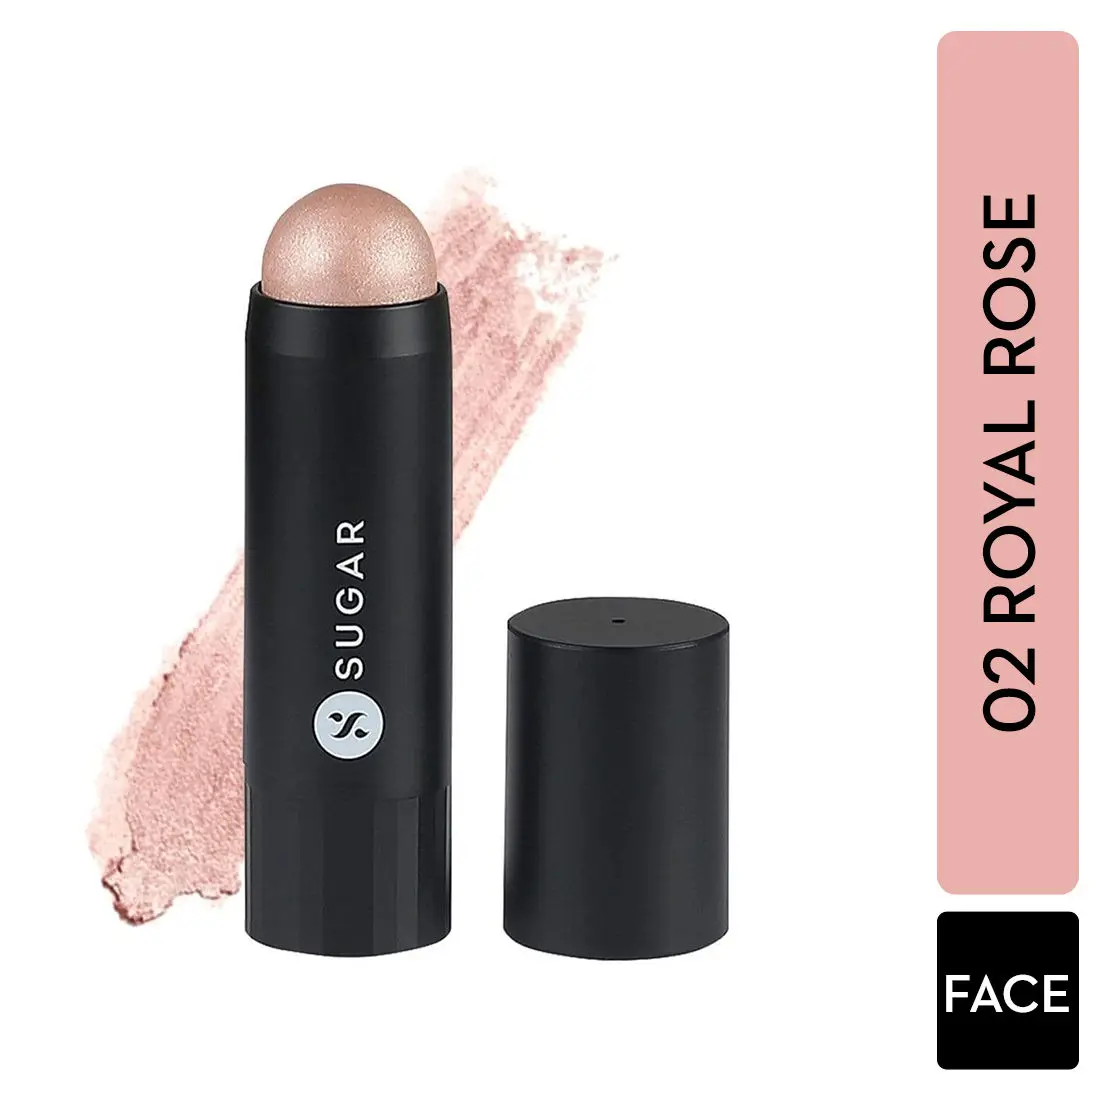 SUGAR Cosmetics - Face Fwd >> - Highlighter Stick - 02 Royal Rose (Rosey Taupe) - Illuminating, Longlasting Formula, Lightweight Highlighter